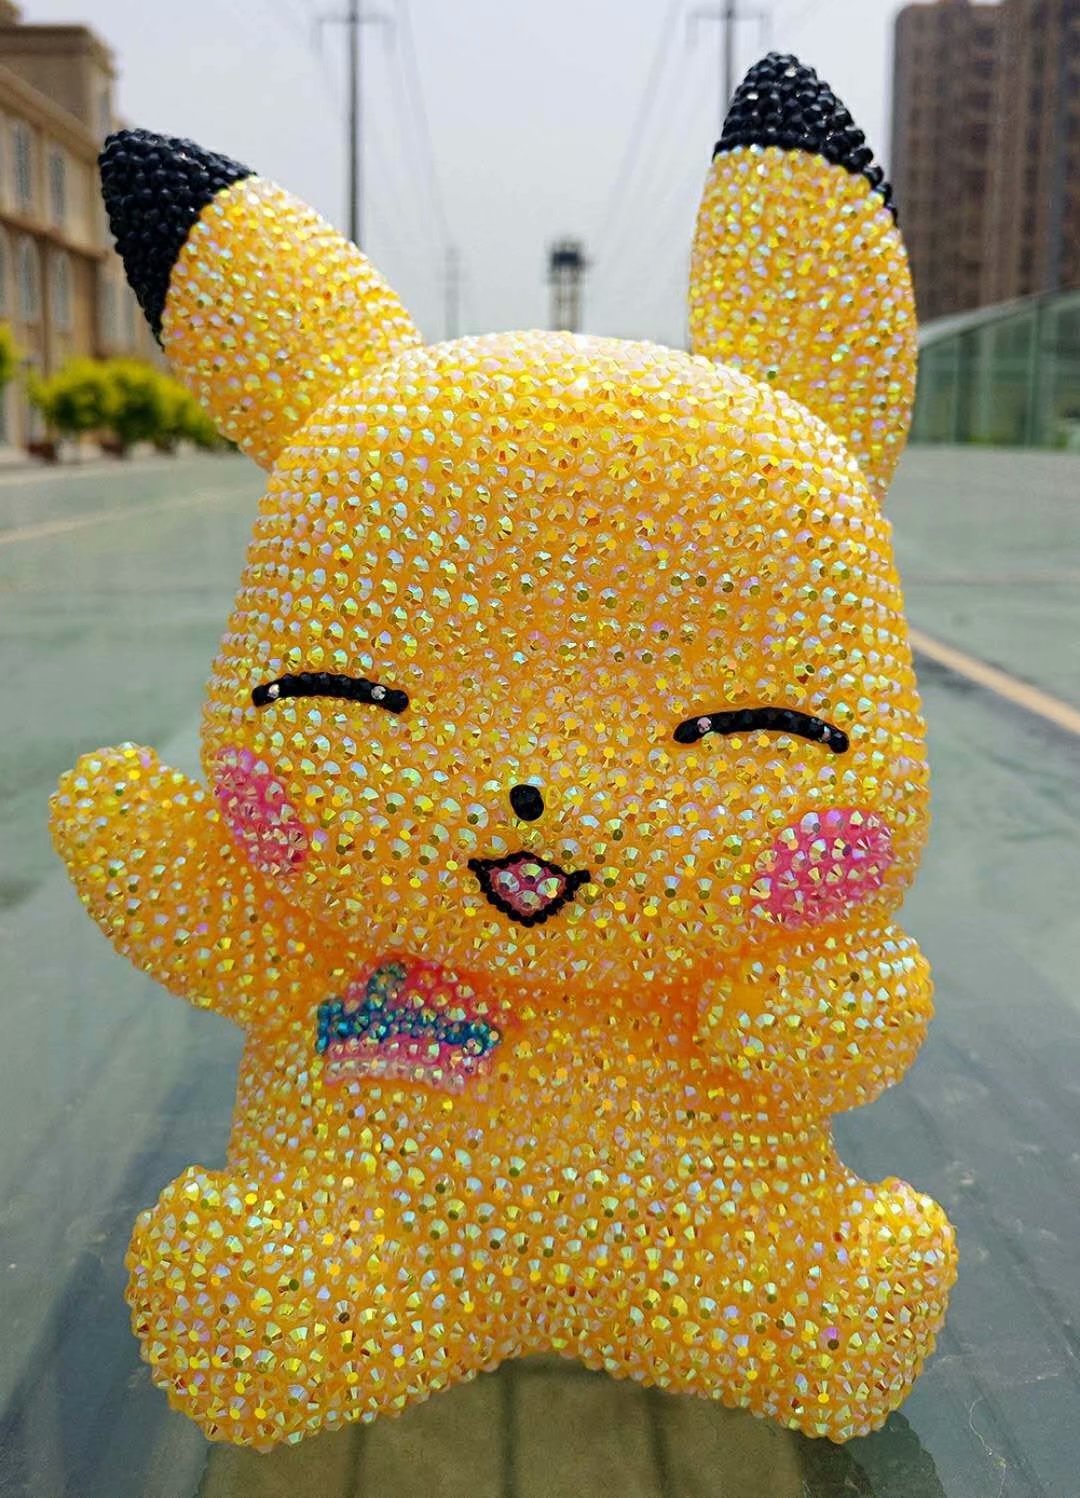 DIY Pikachu - Crystal Rhinestone Full Diamond Painting Piggy Bank (No glue)